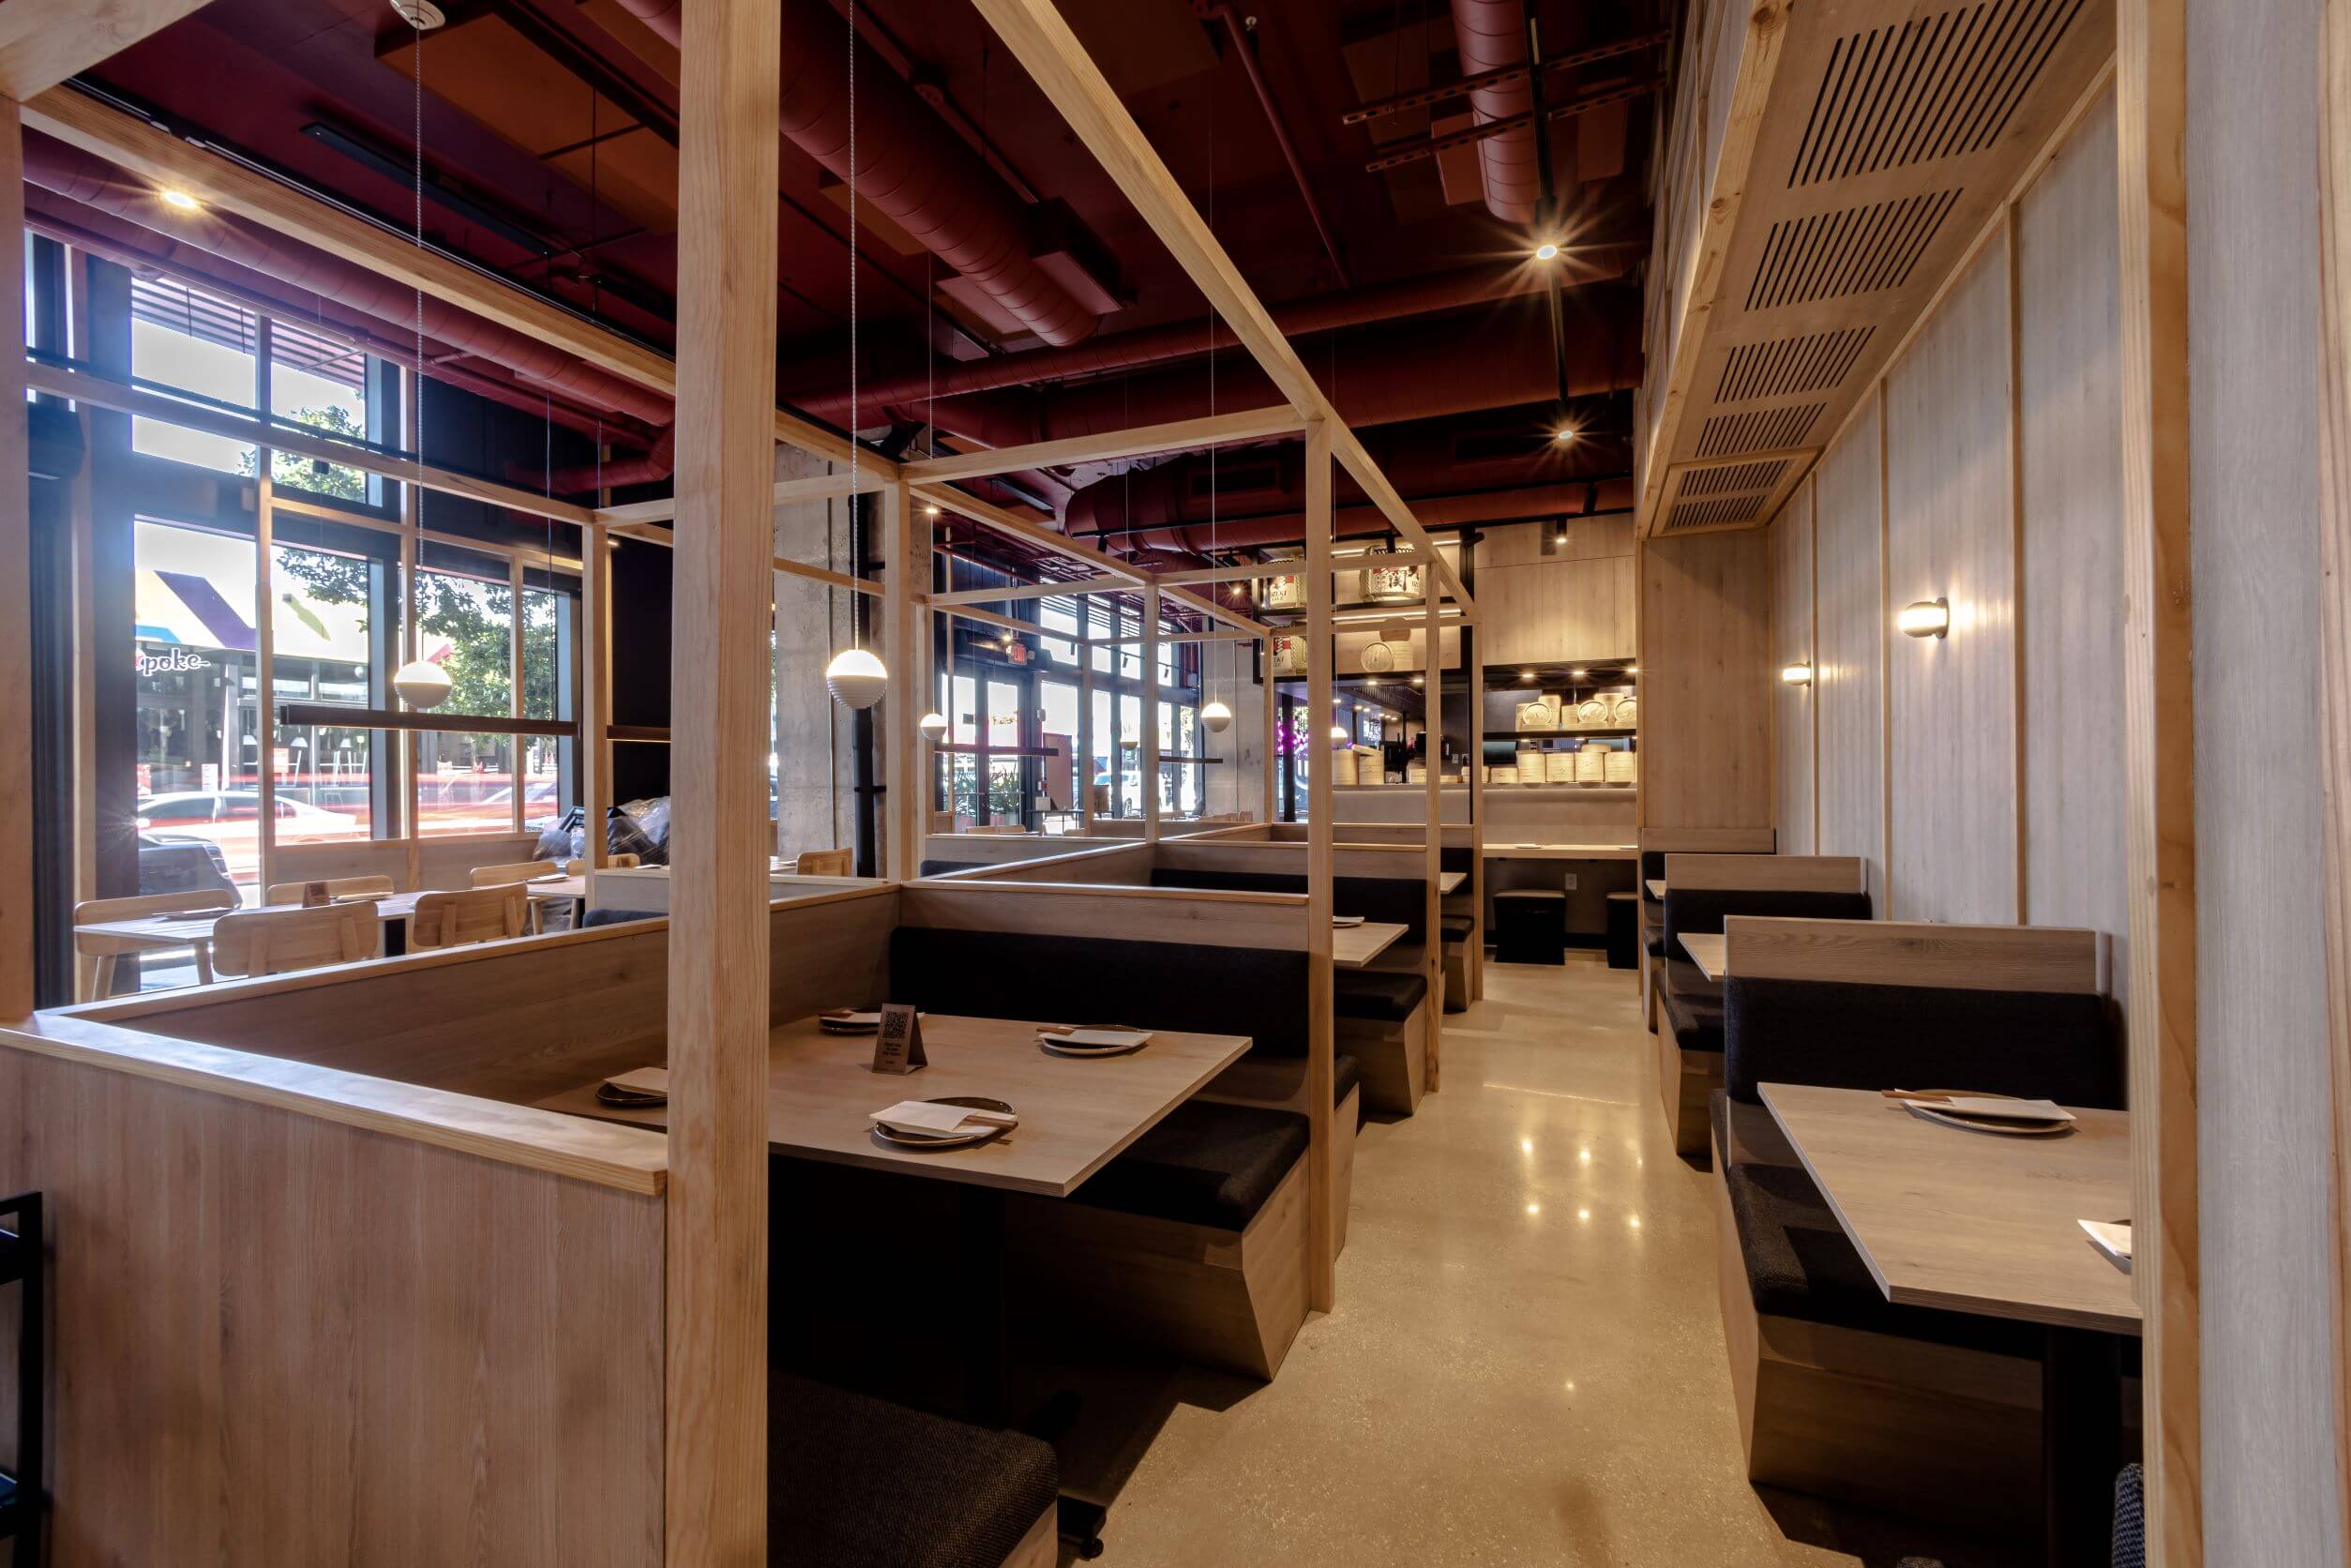 Udon wynwood Restaurant interior buildout